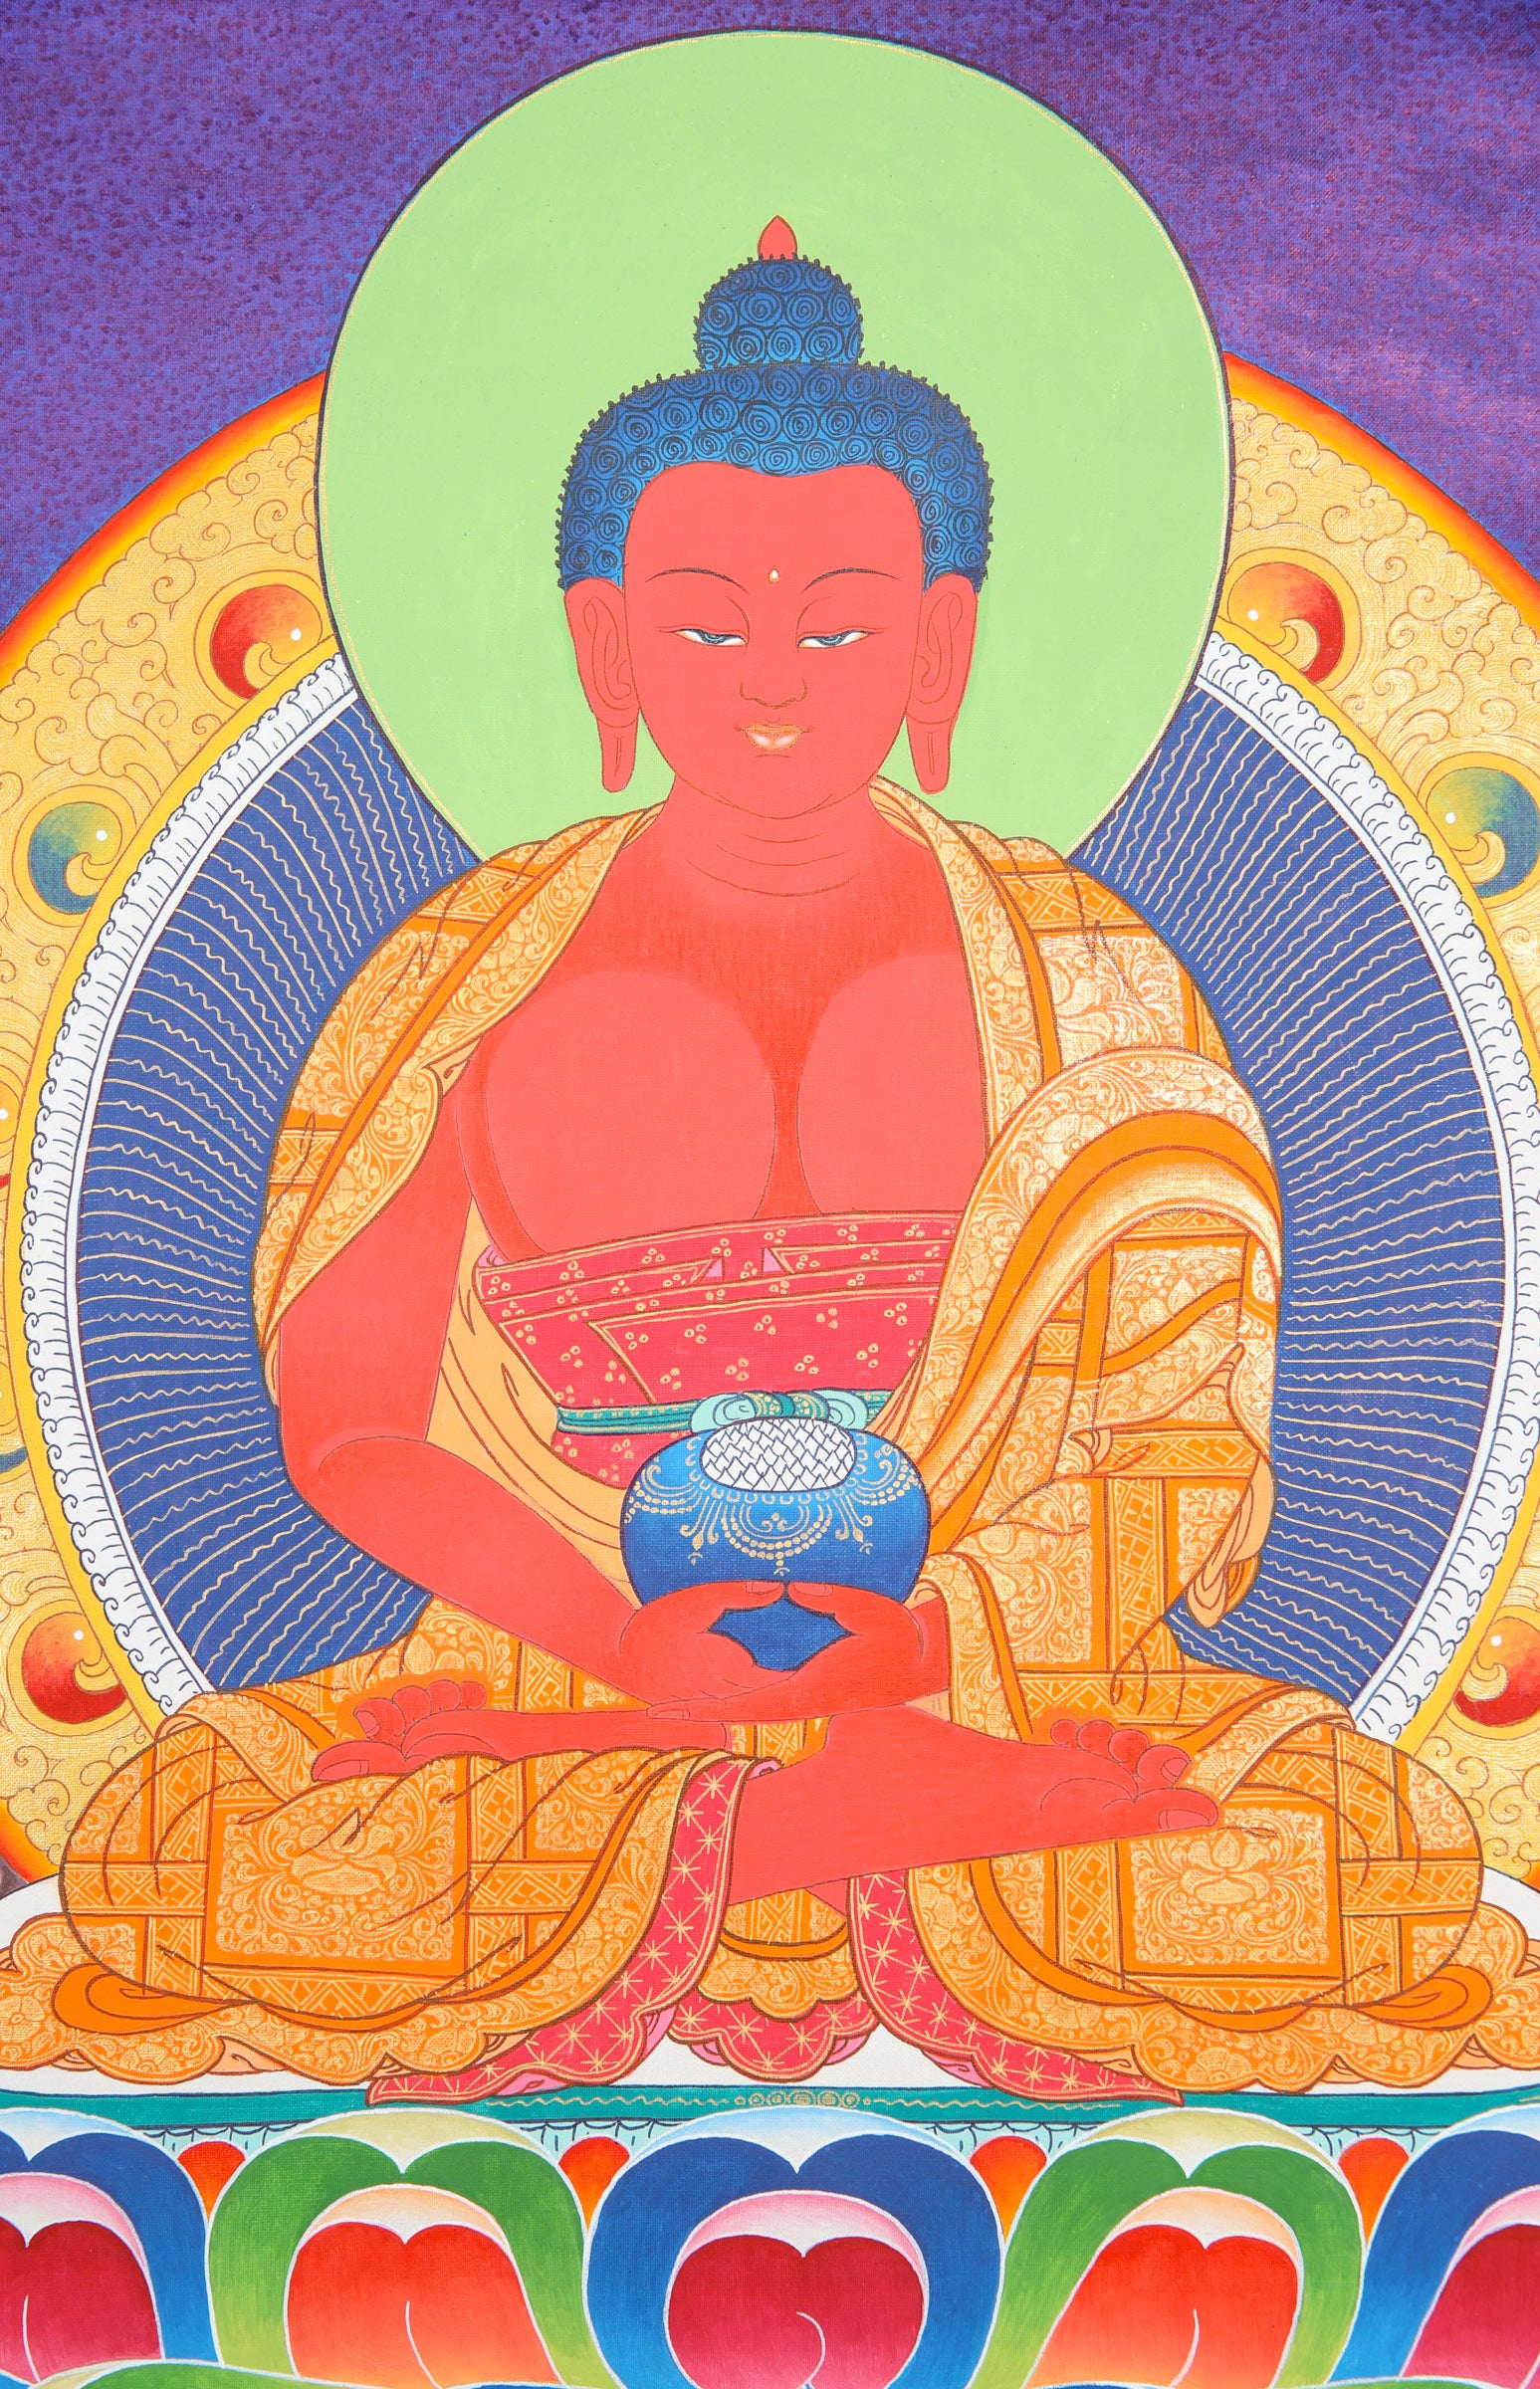 Amitabha Buddha Thangka Painting for prayer and devotion.